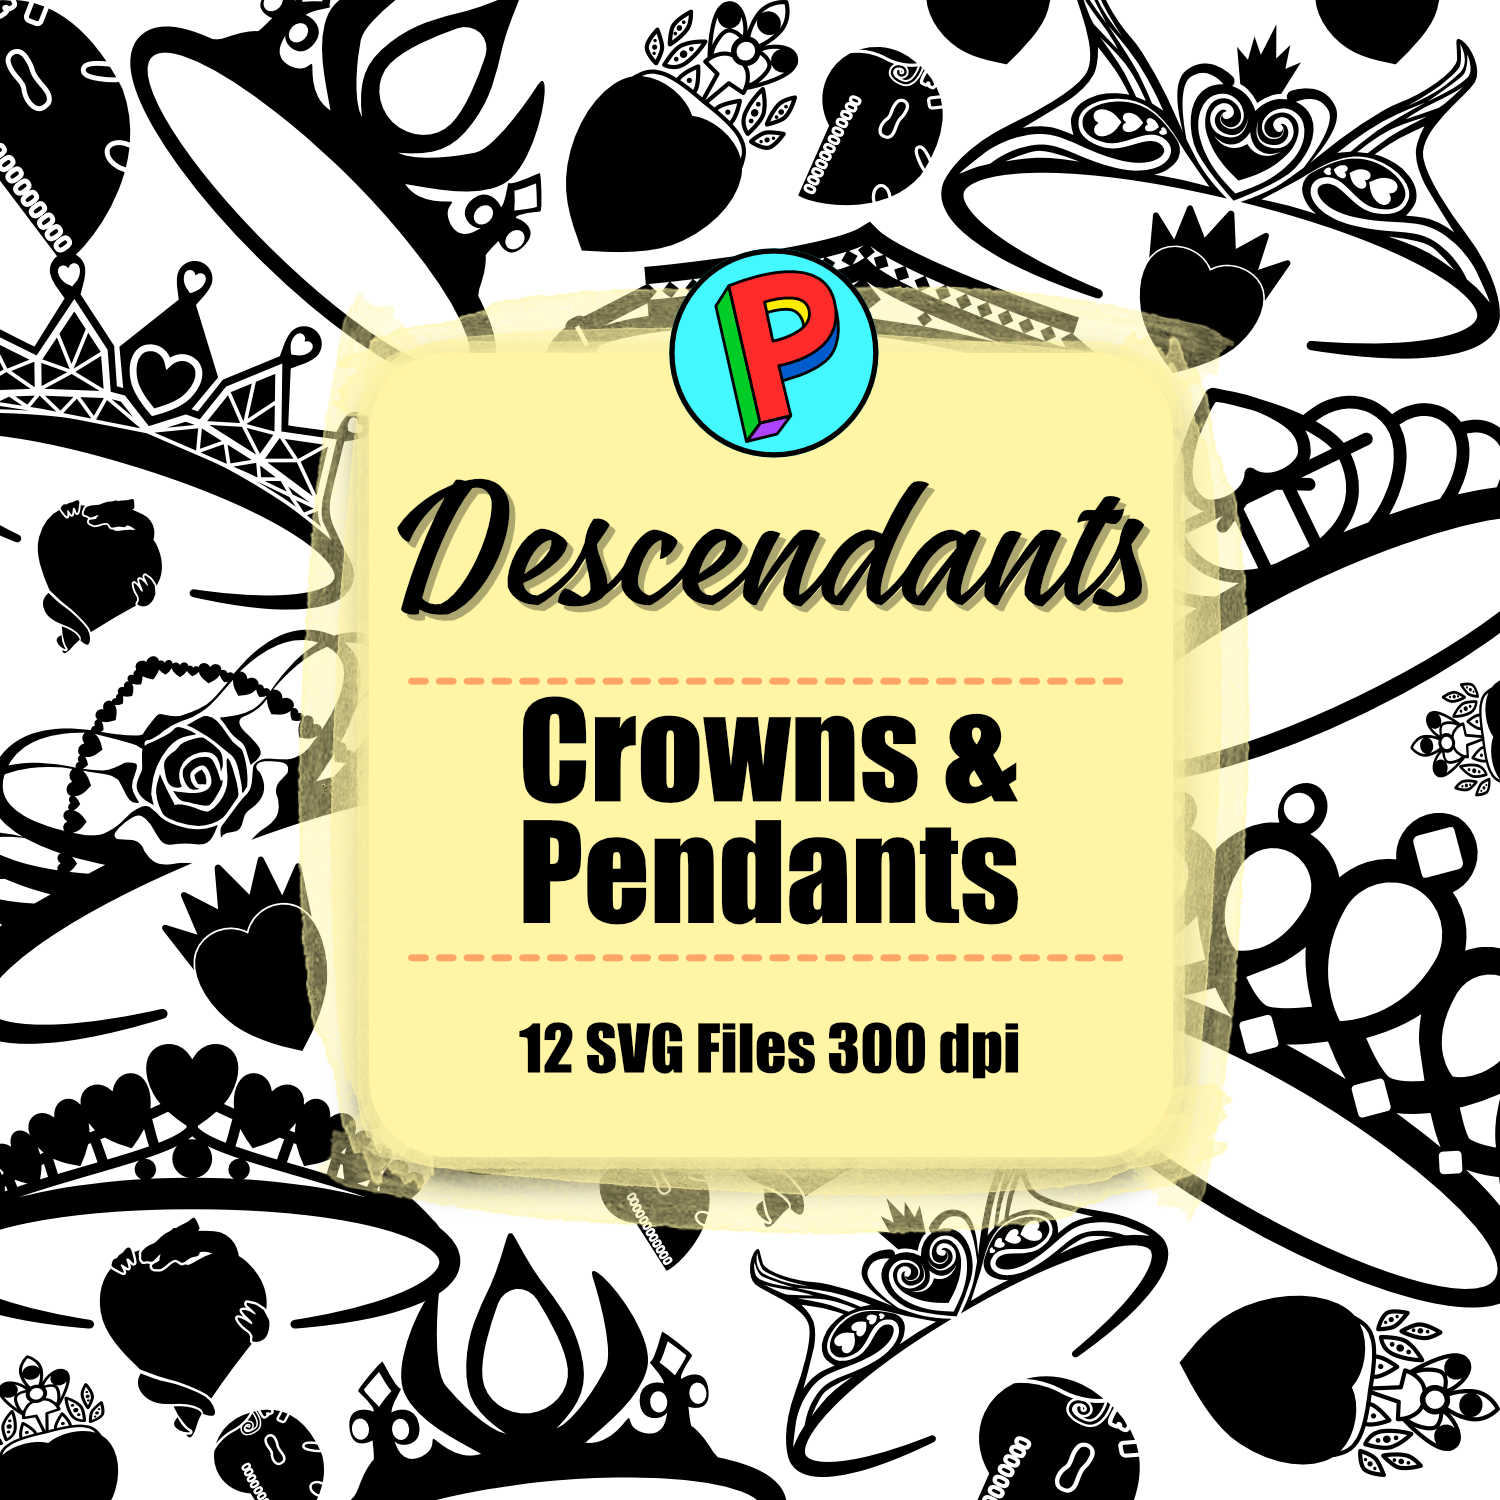 Download Descendants 2 Crowns and Pendants 12 SVG Files 300 dpi | Etsy